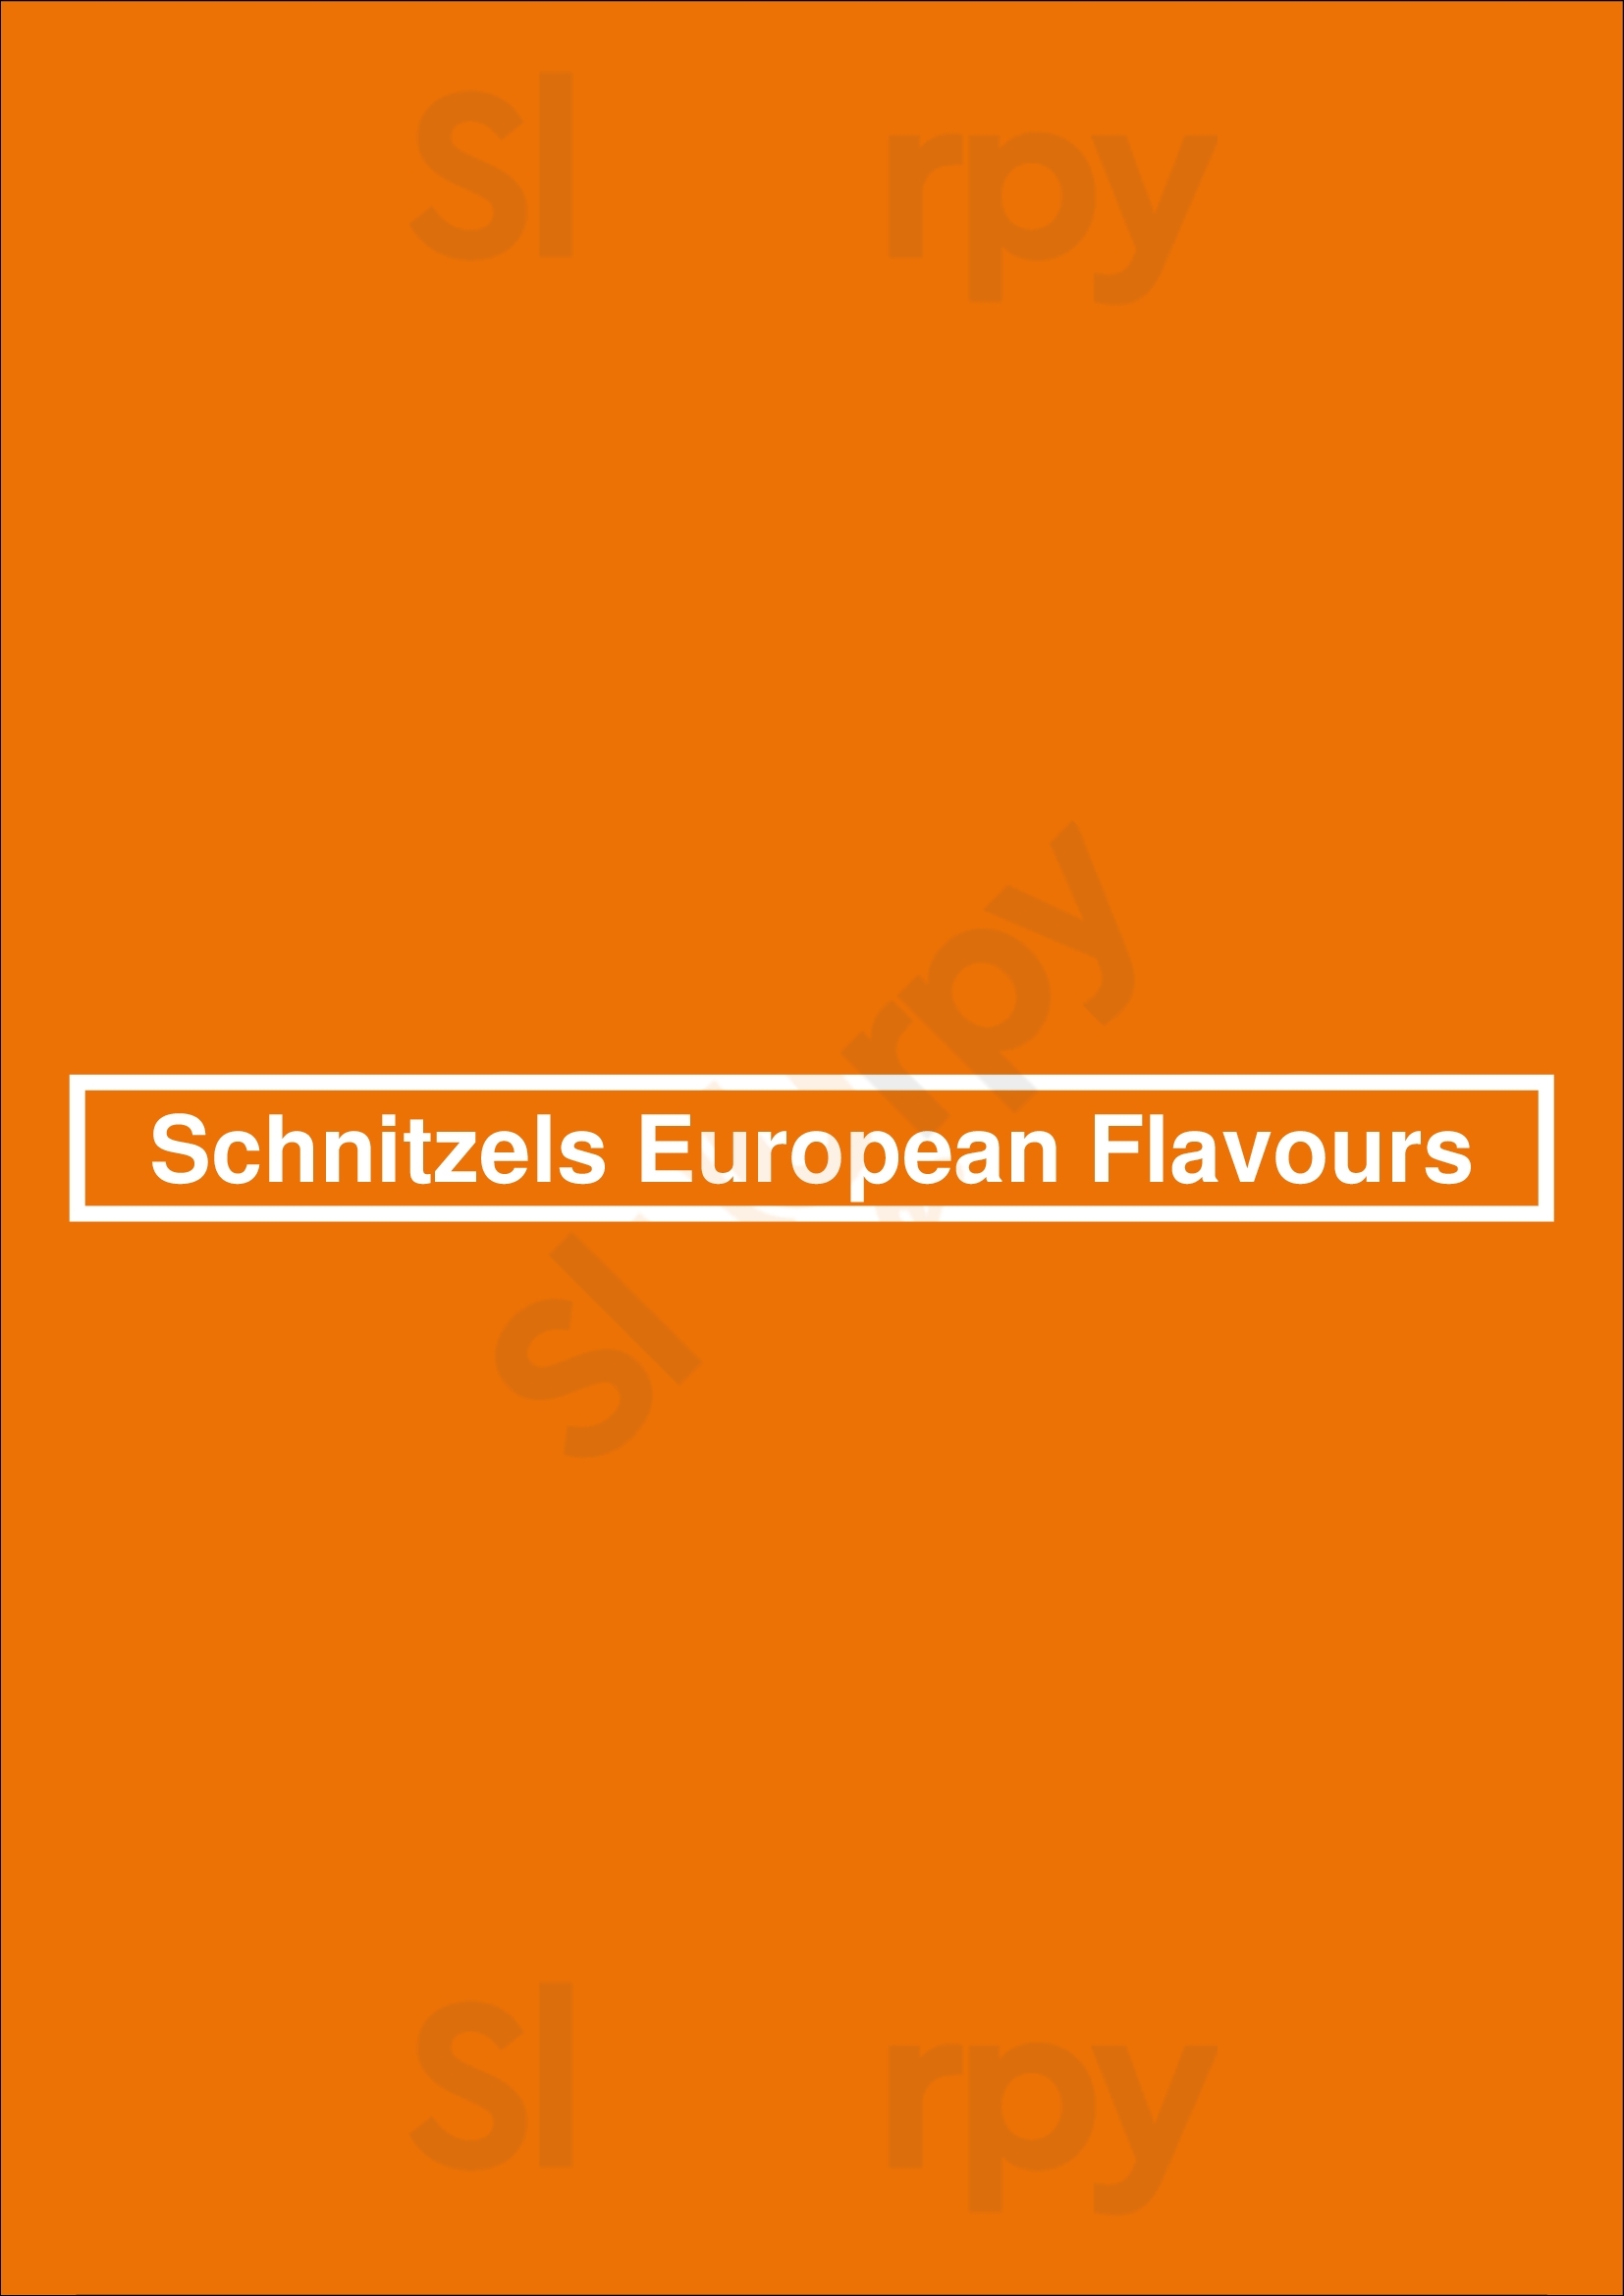 Schnitzels European Flavours Cornwall Menu - 1